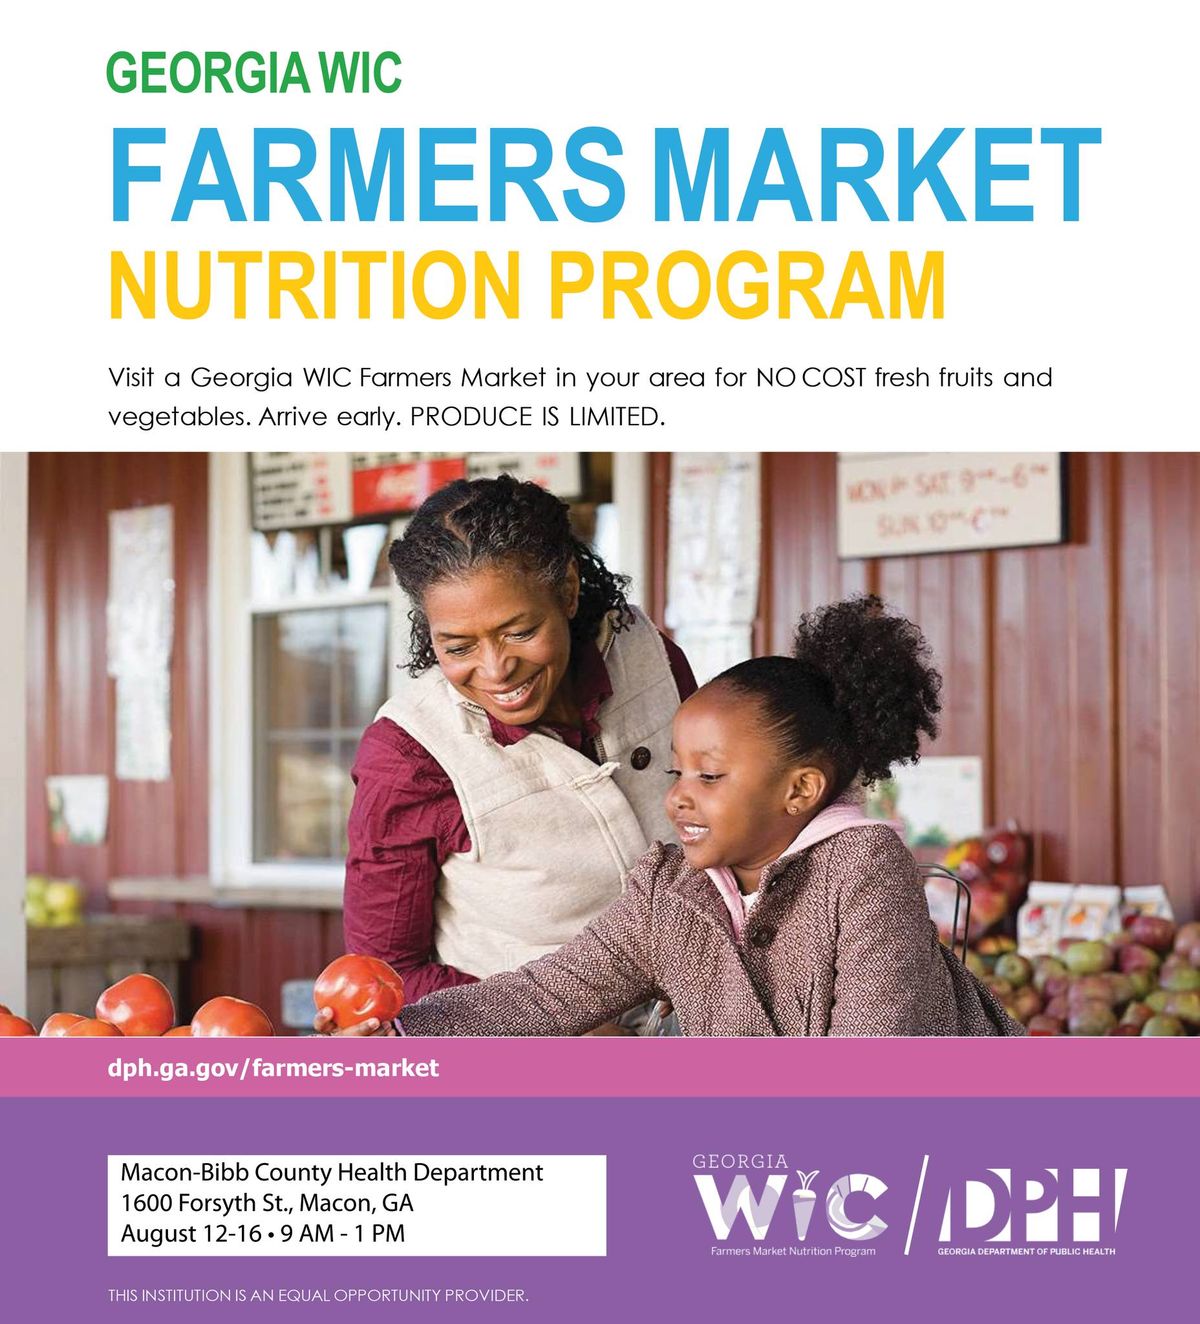 WIC Farmers Market - Macon-Bibb County Health Department